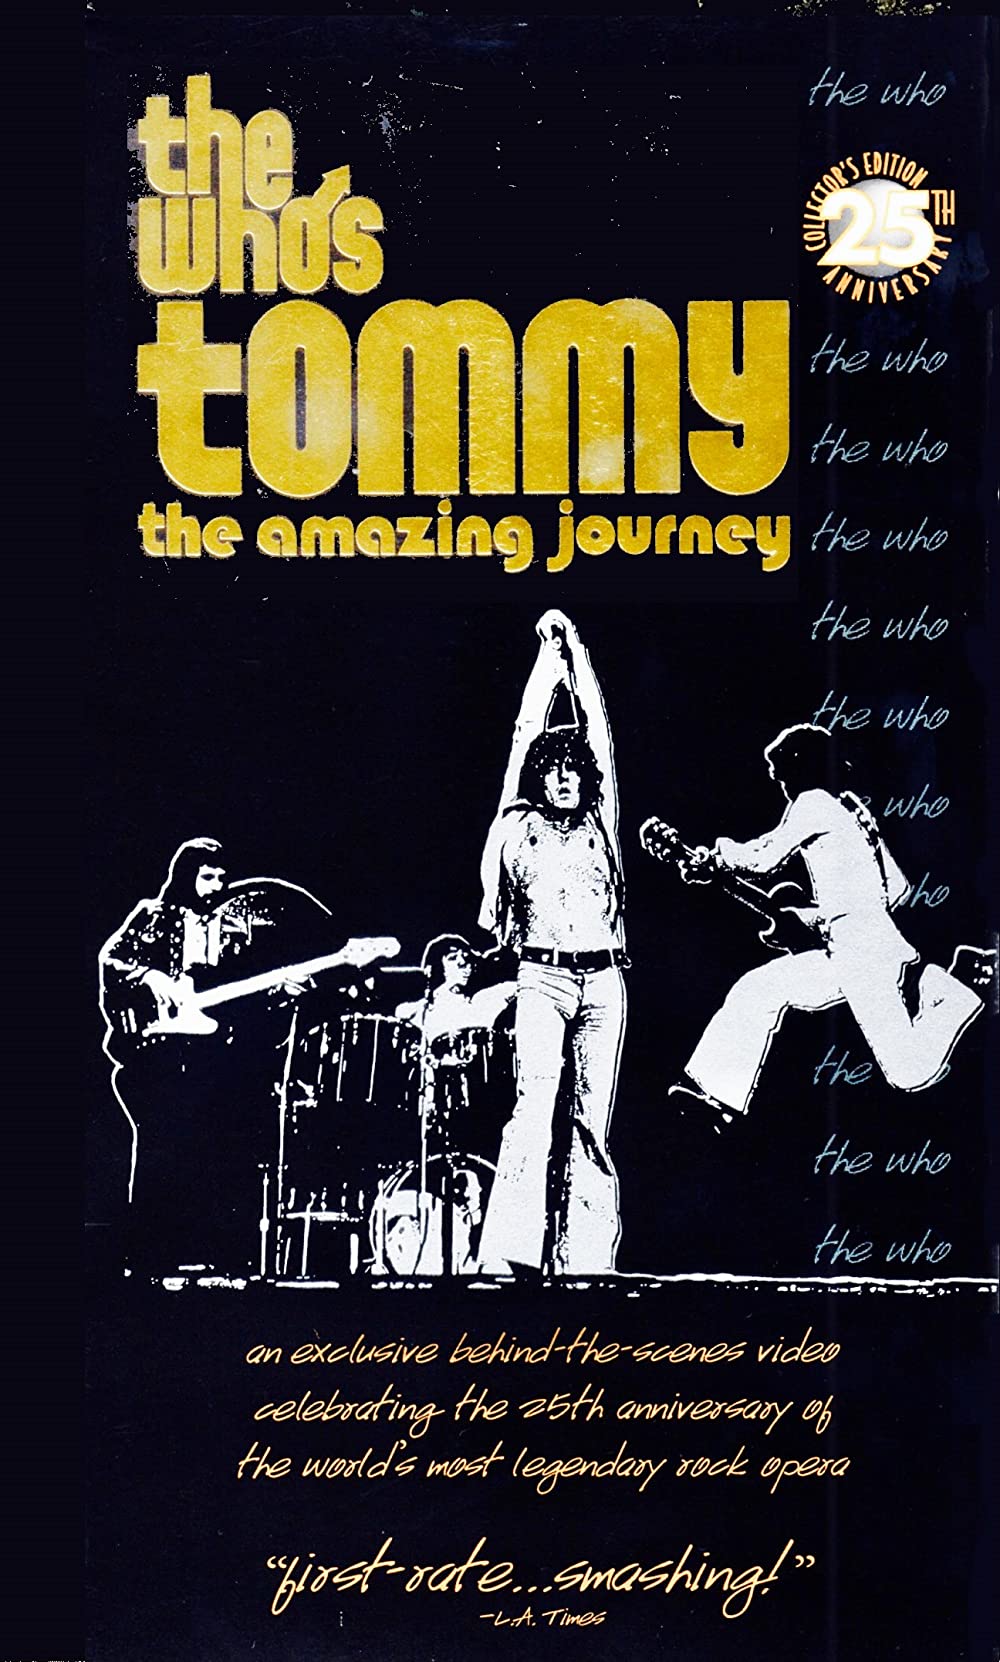 Filmbeschreibung zu Tommy - The Who (OV)